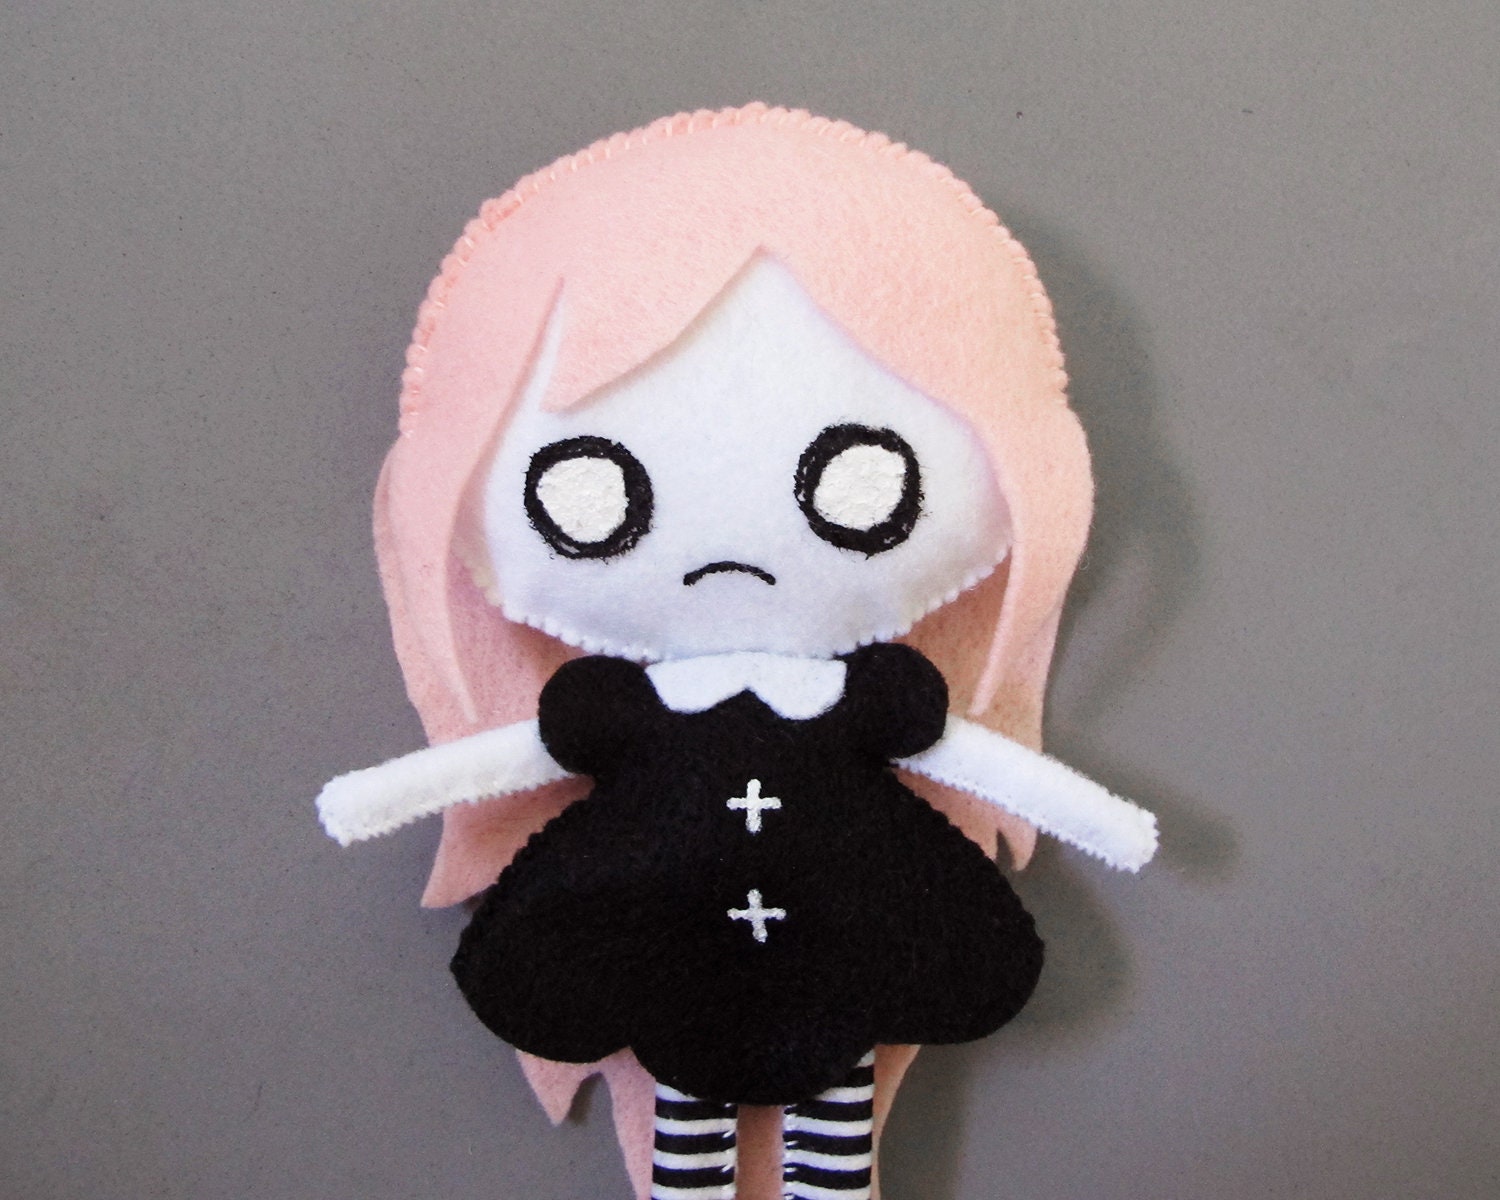 Pink Pastel Goth Creepy Plush Doll 